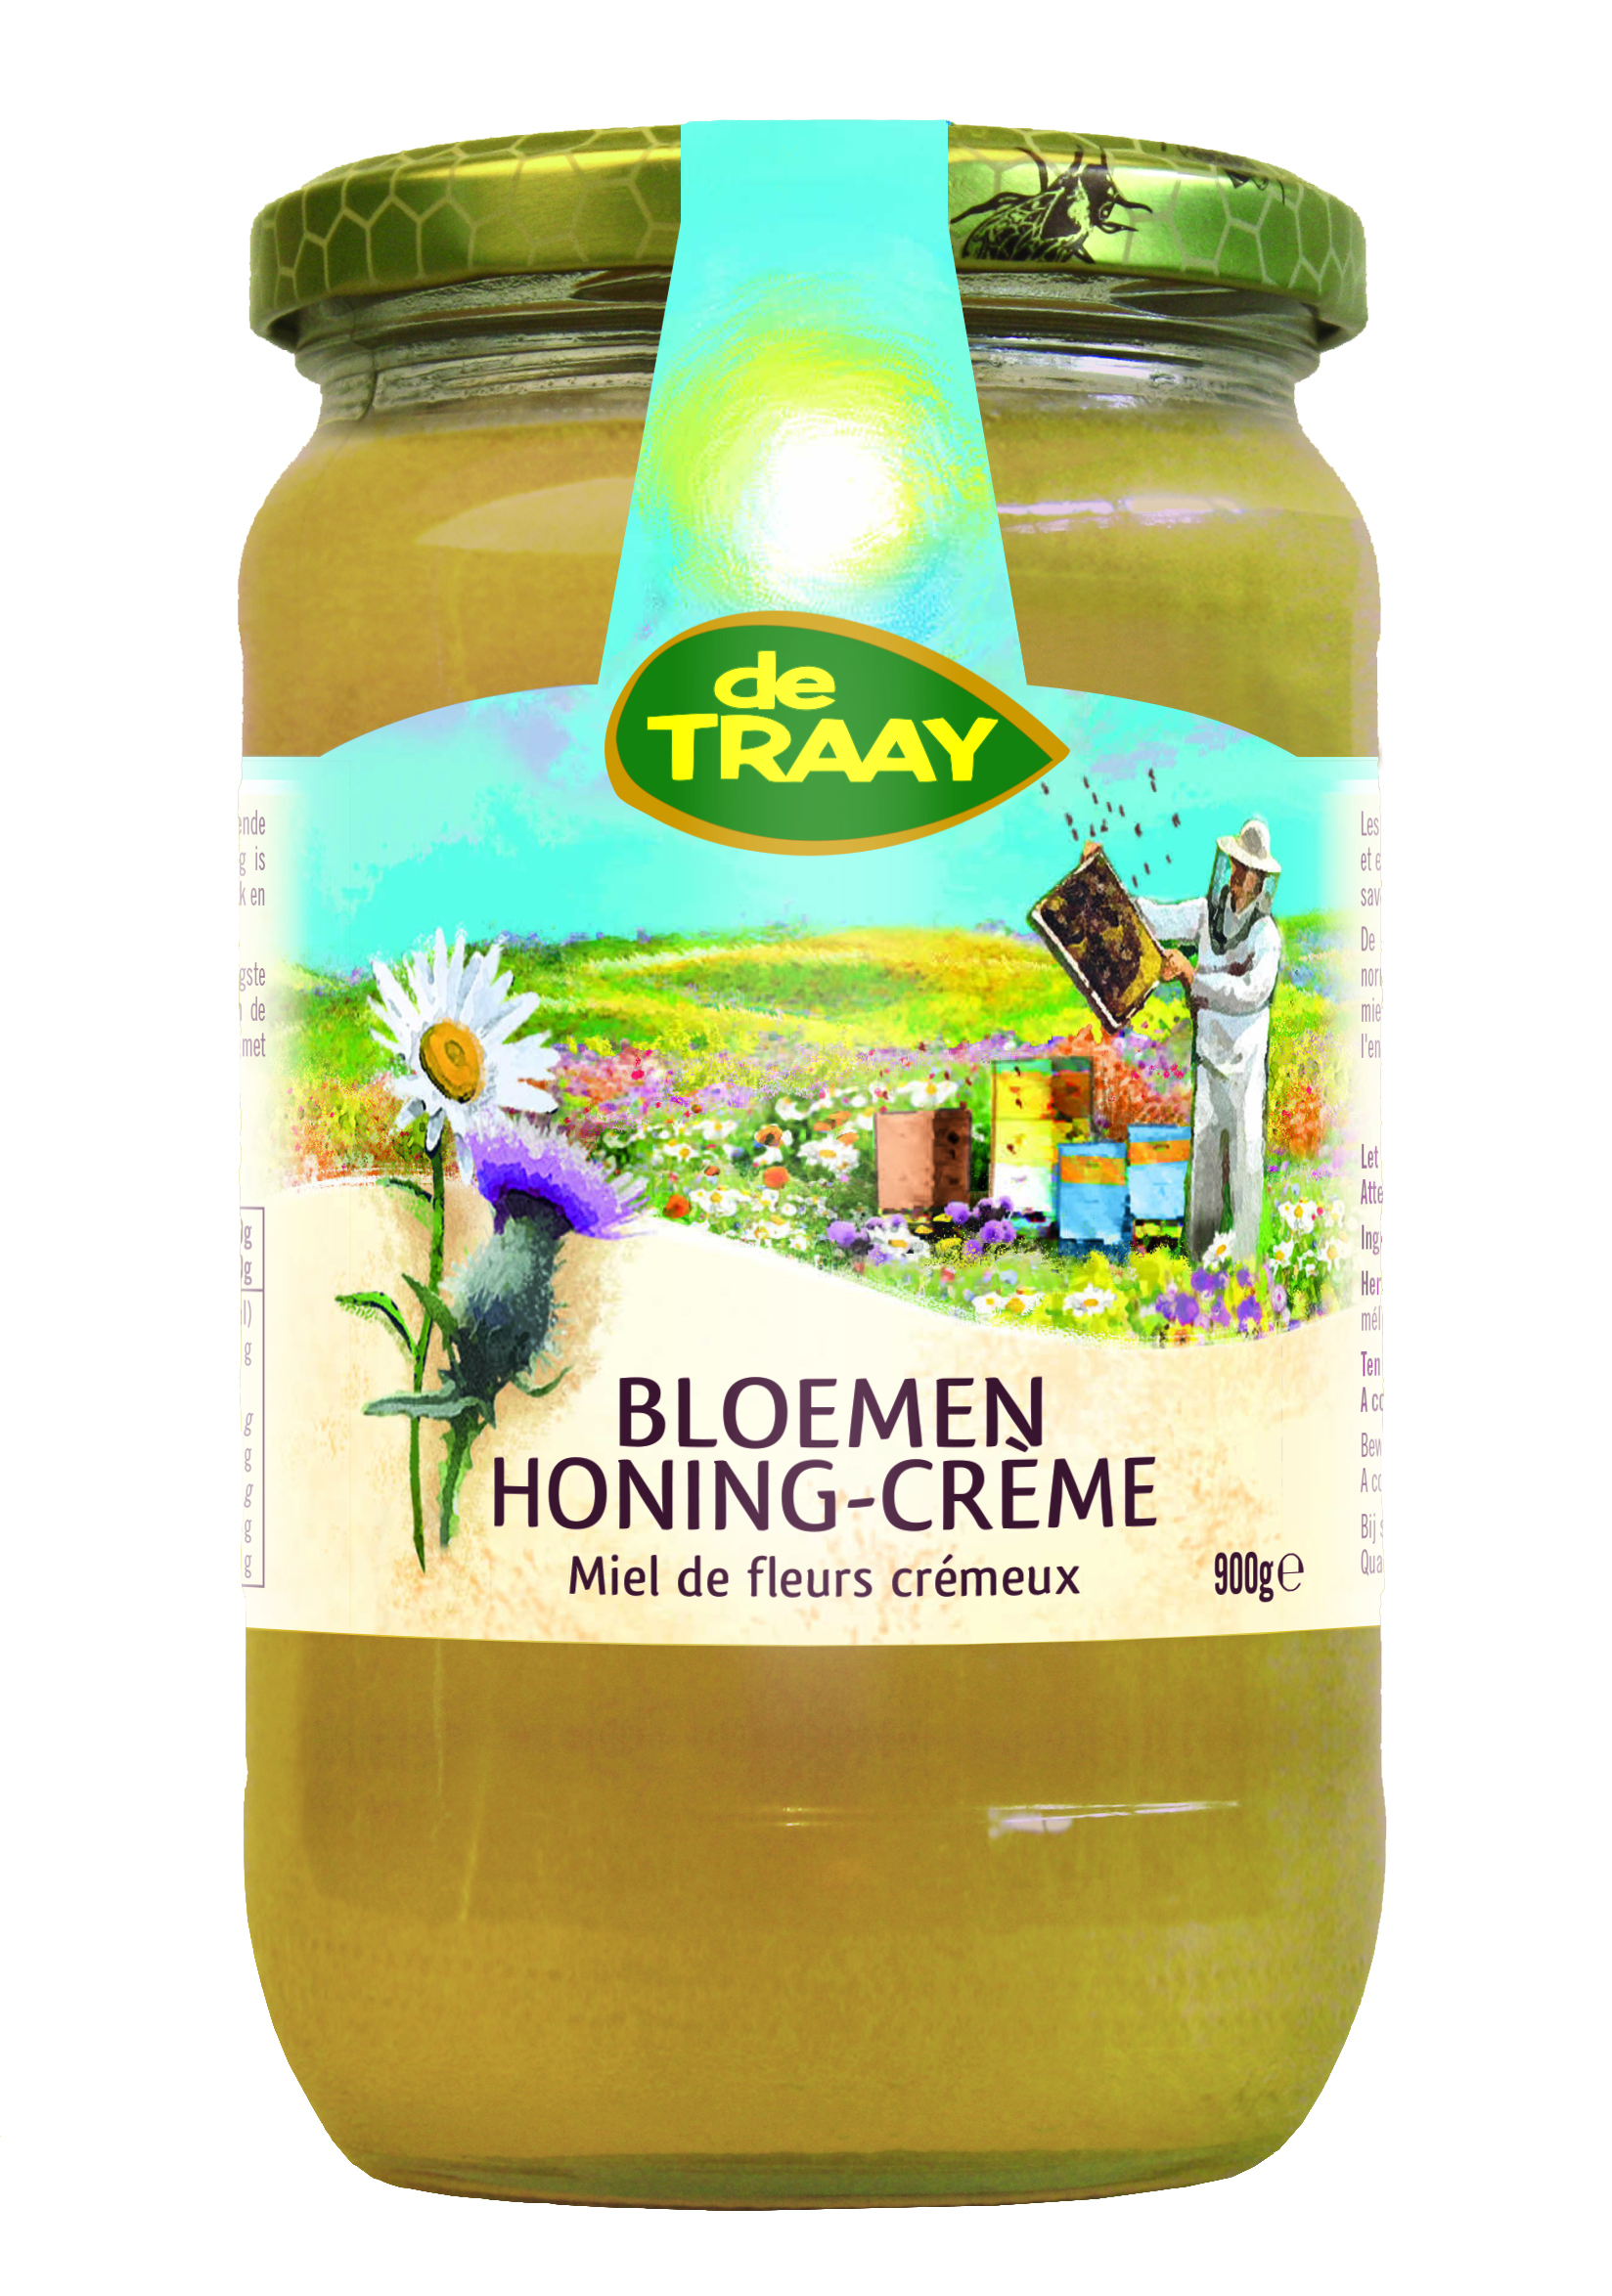 De Traay Bloemen honing crème 900g